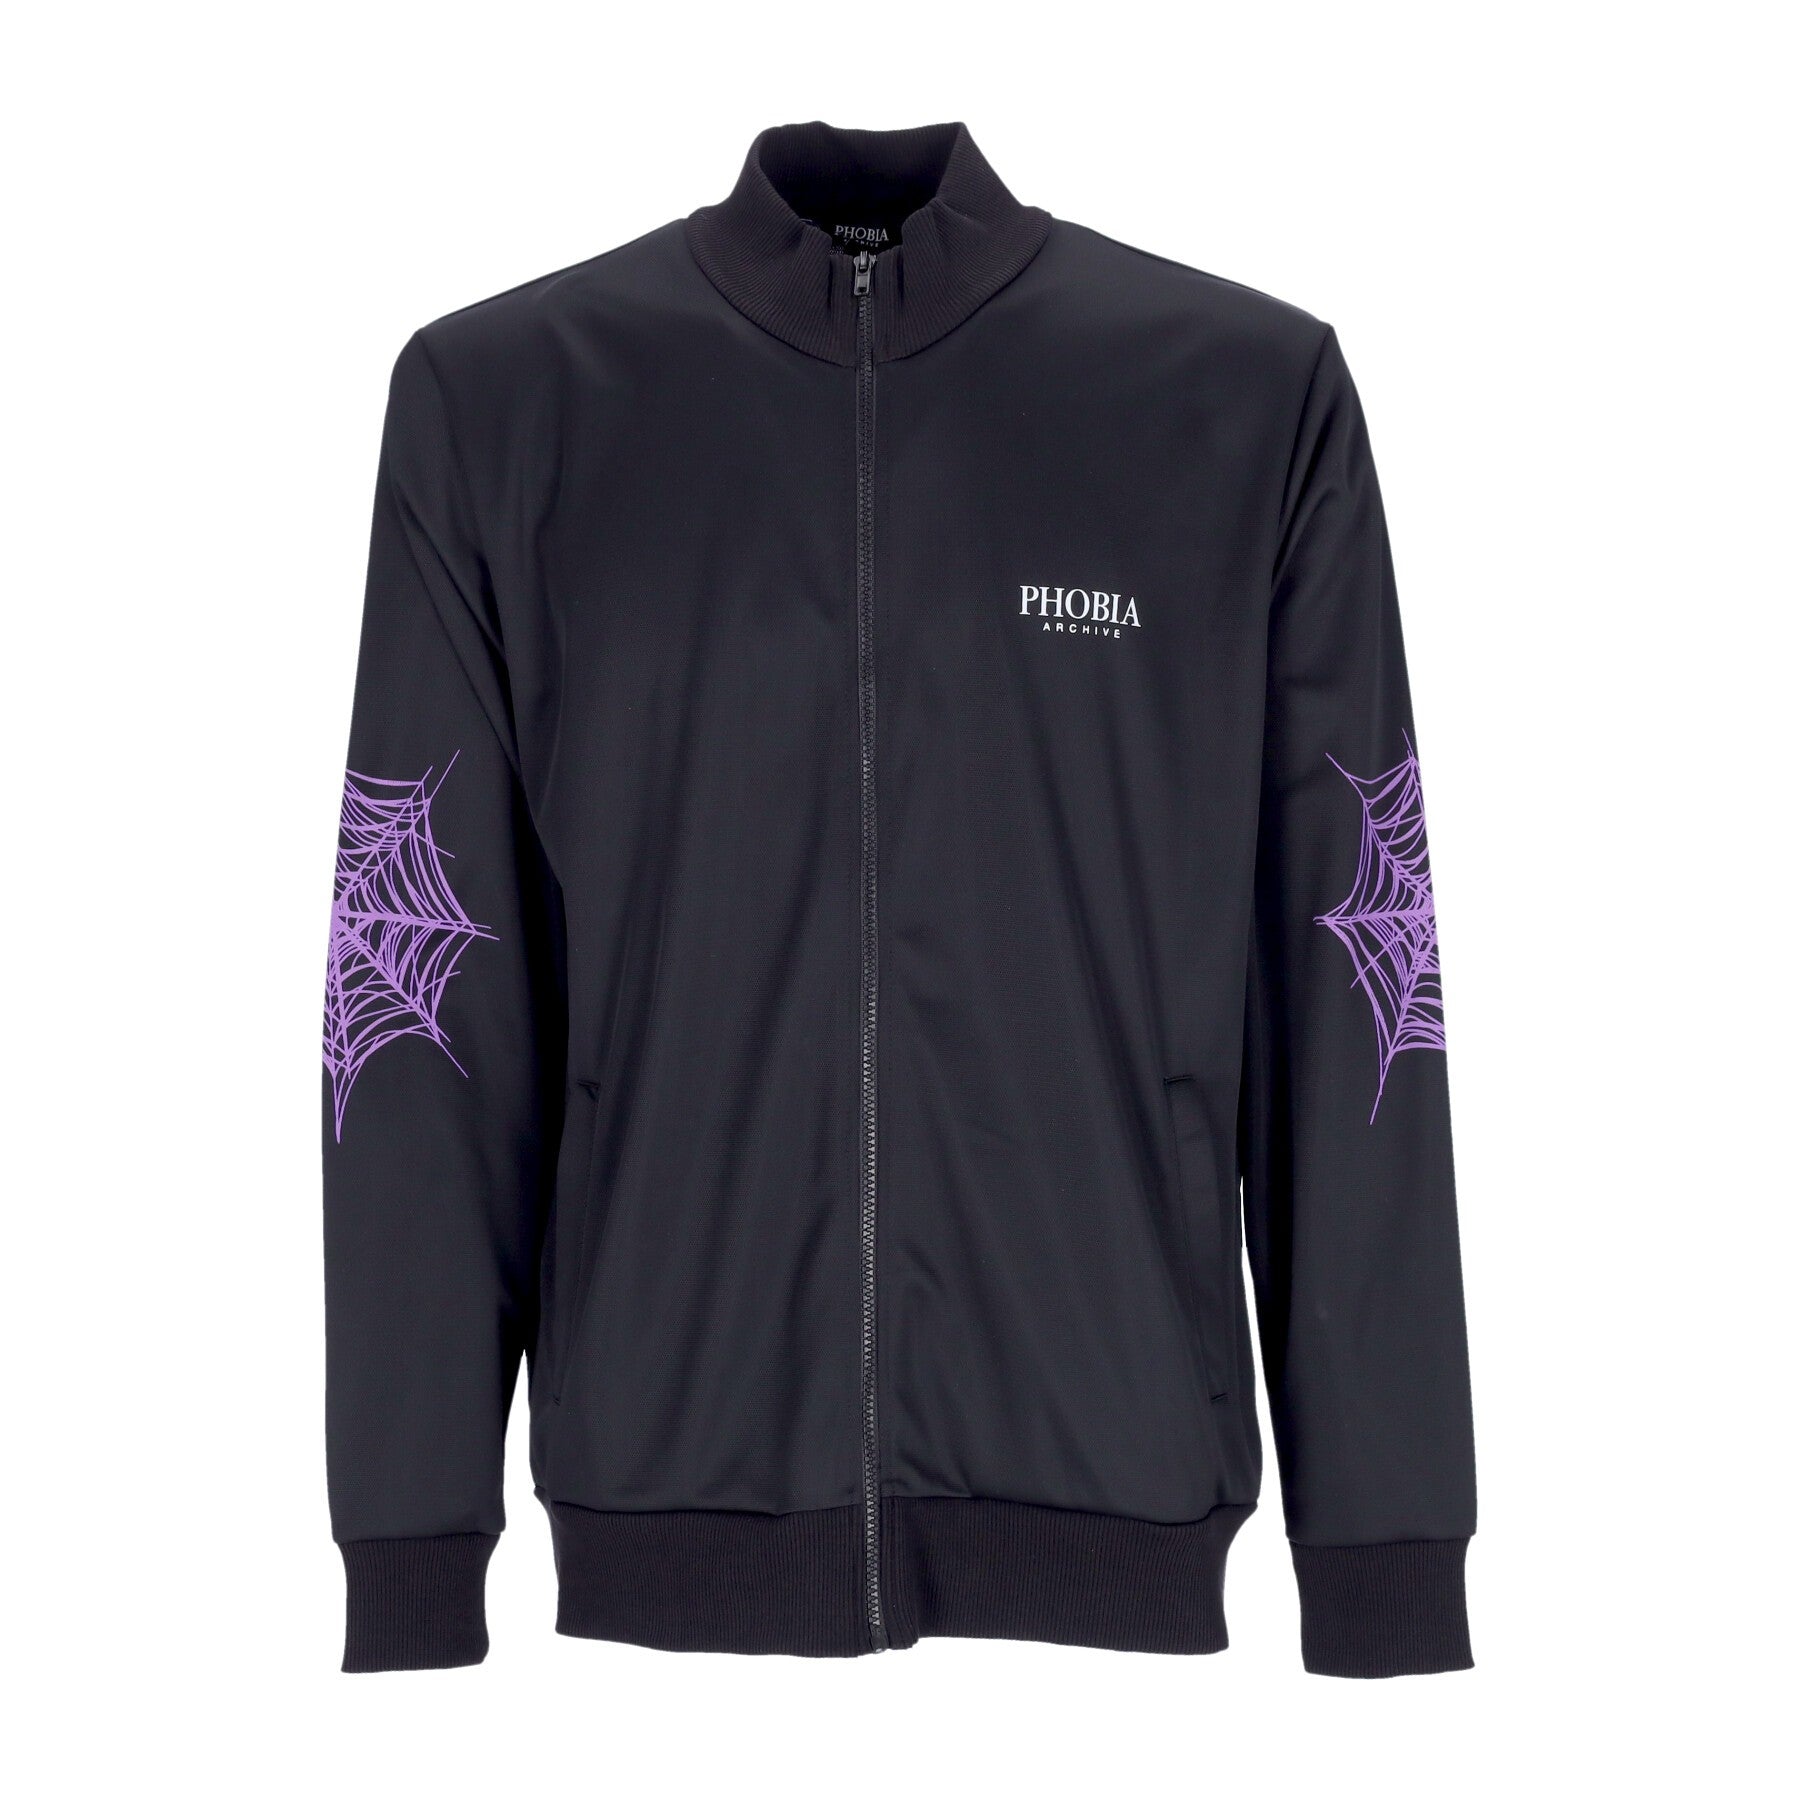 Phobia, Giacca Tuta Uomo Cobweb Print Sweatshirt, Black/purple